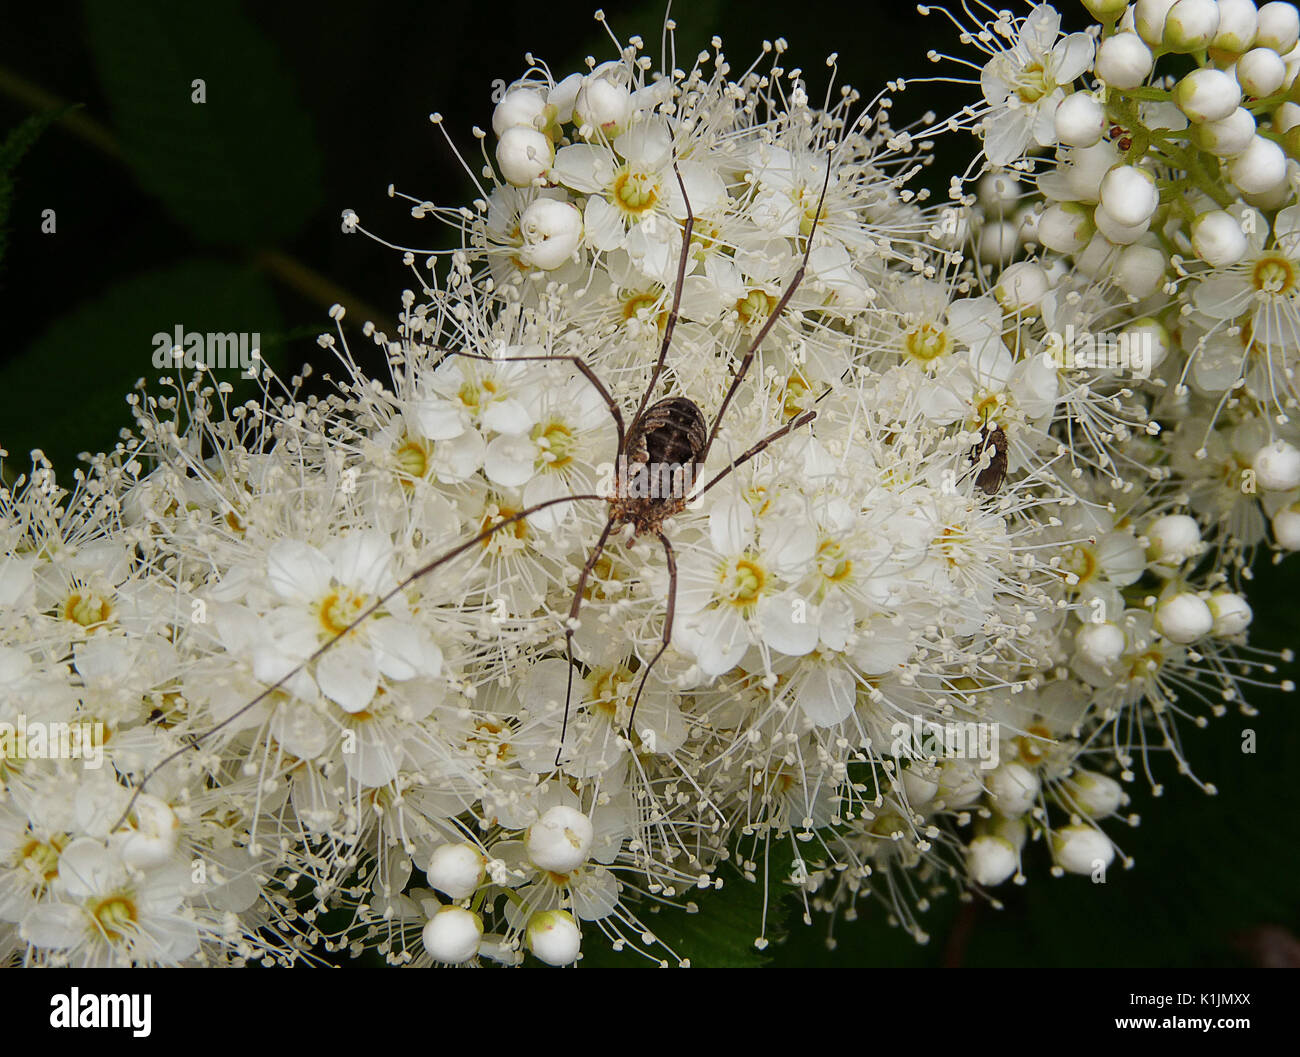 Prunus serotina, black cherry, close-up spider, flower head; freshness; beauty of nature, blooming beautiful delicate flowers Stock Photo